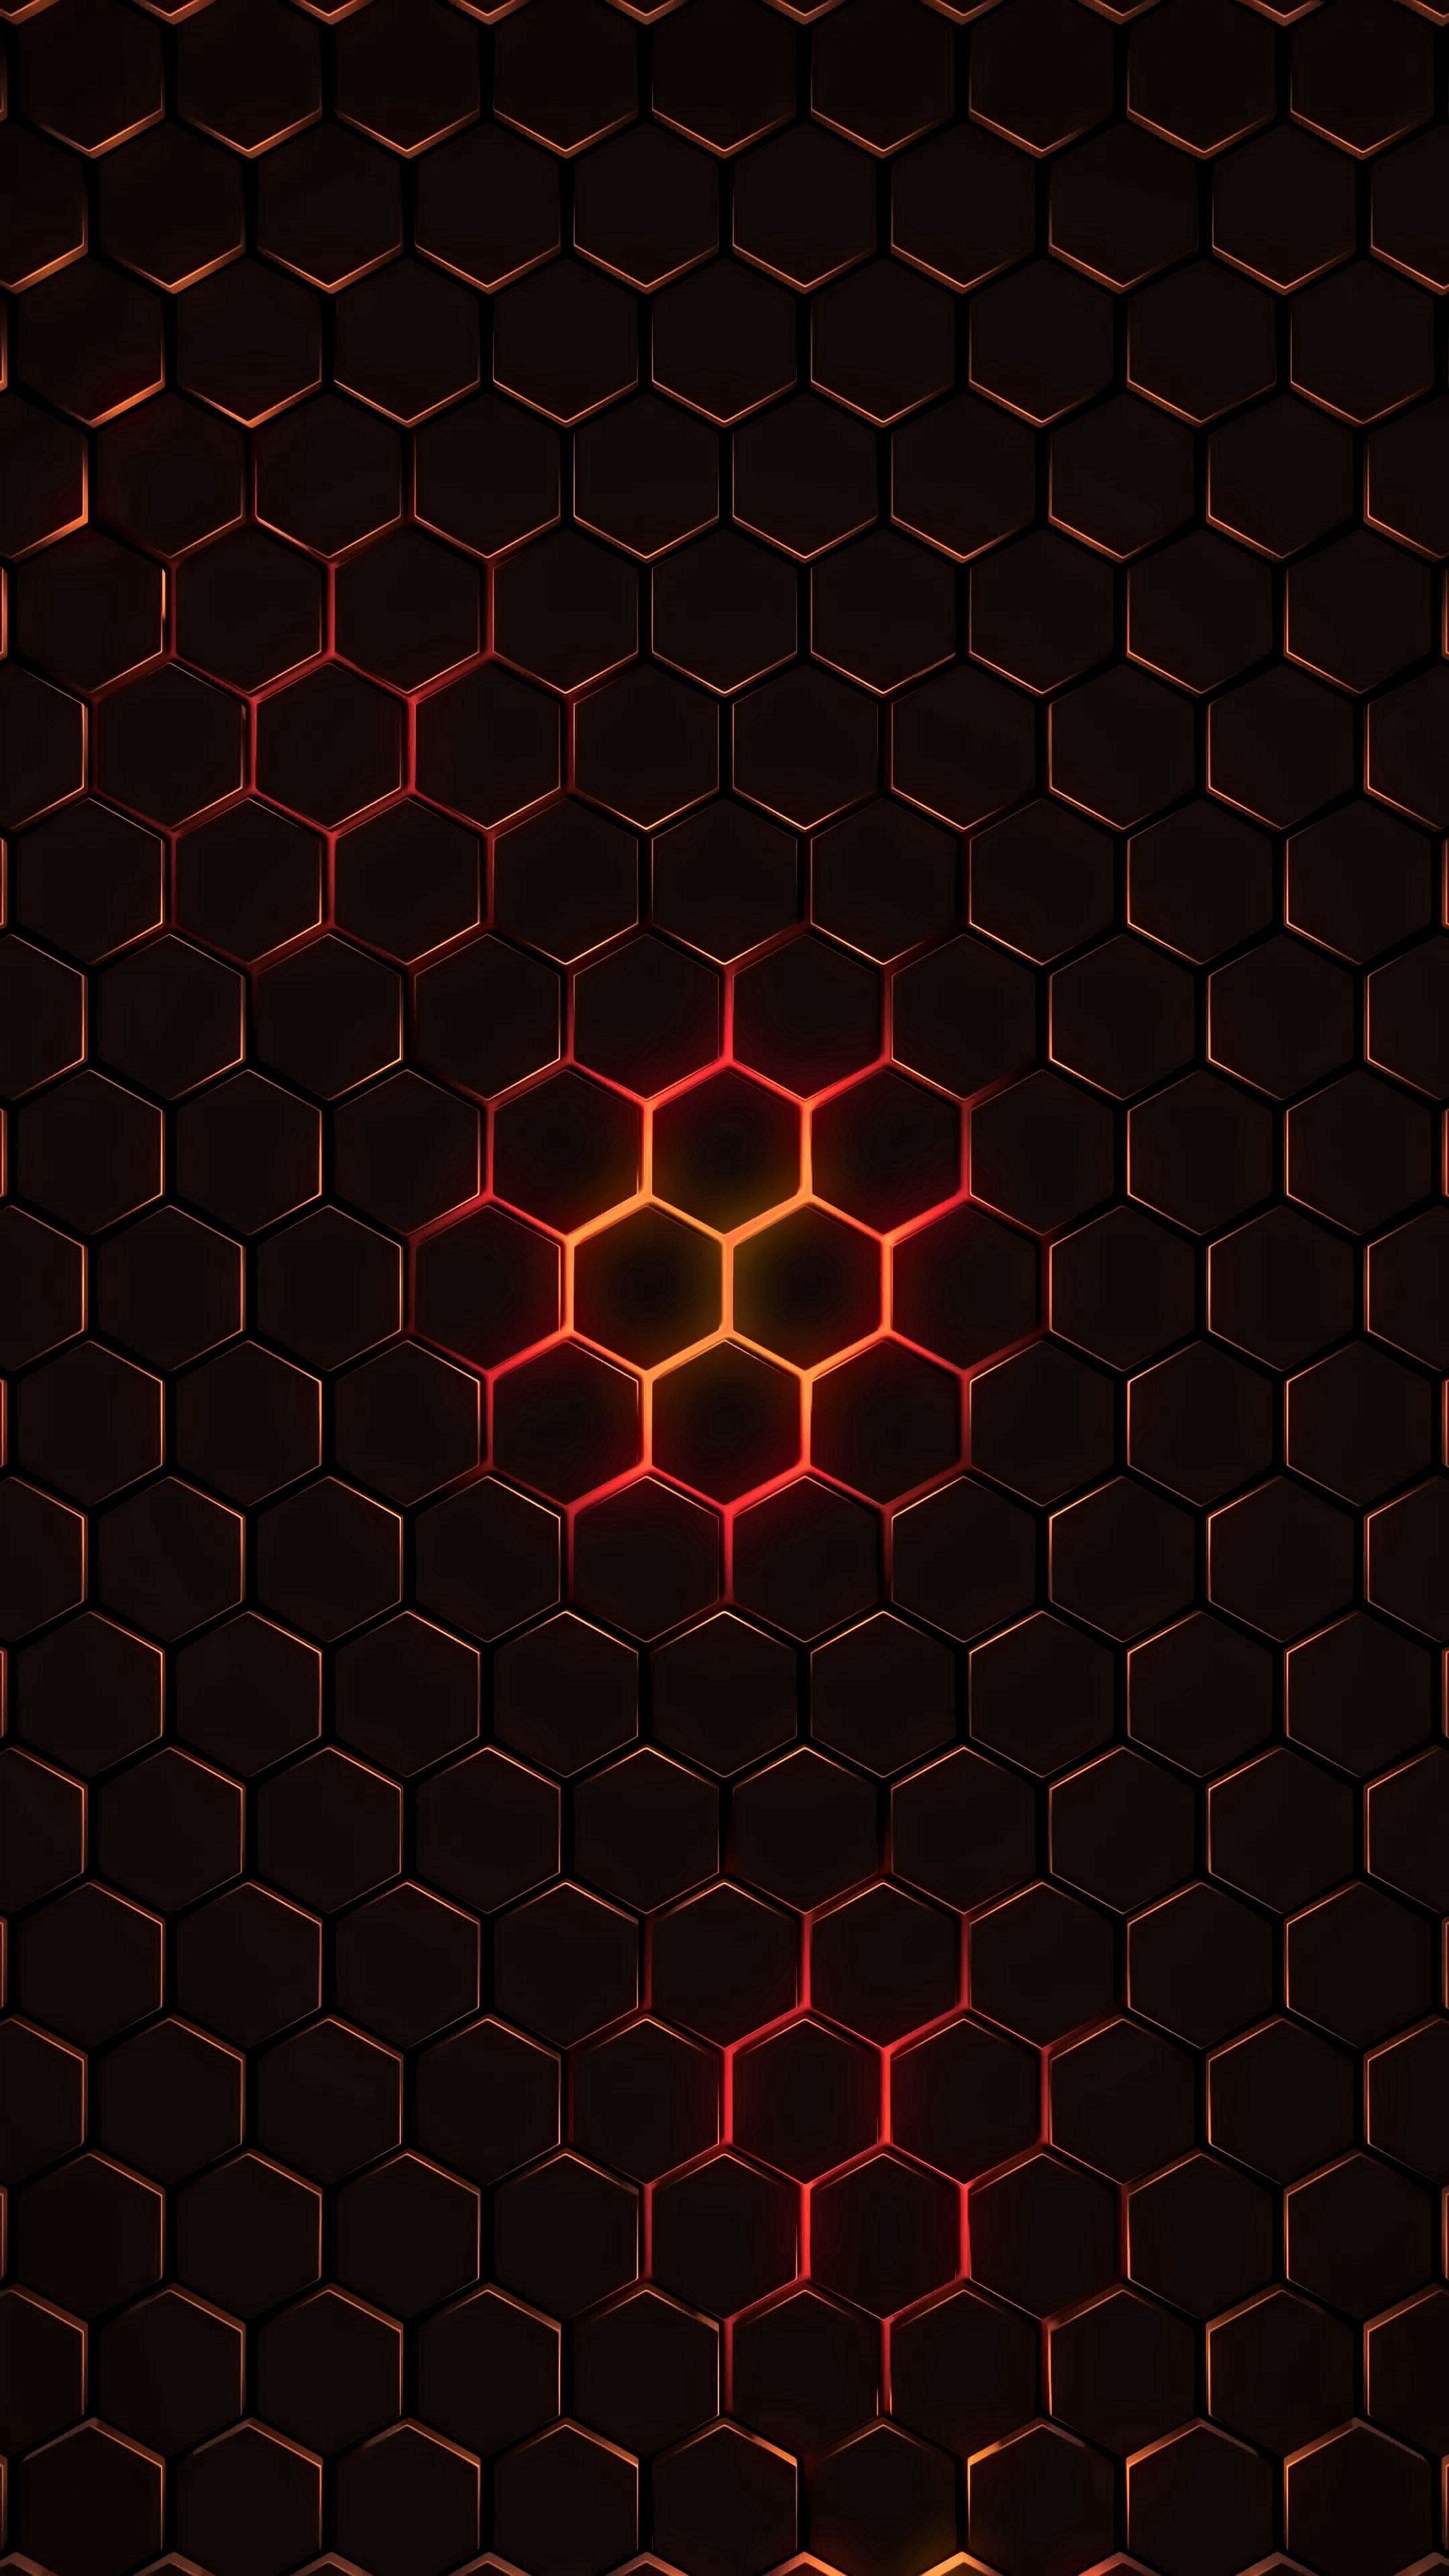 glow, abstract, texture, cell, dark, hexagons, hexagonals, cells iphone wallpaper